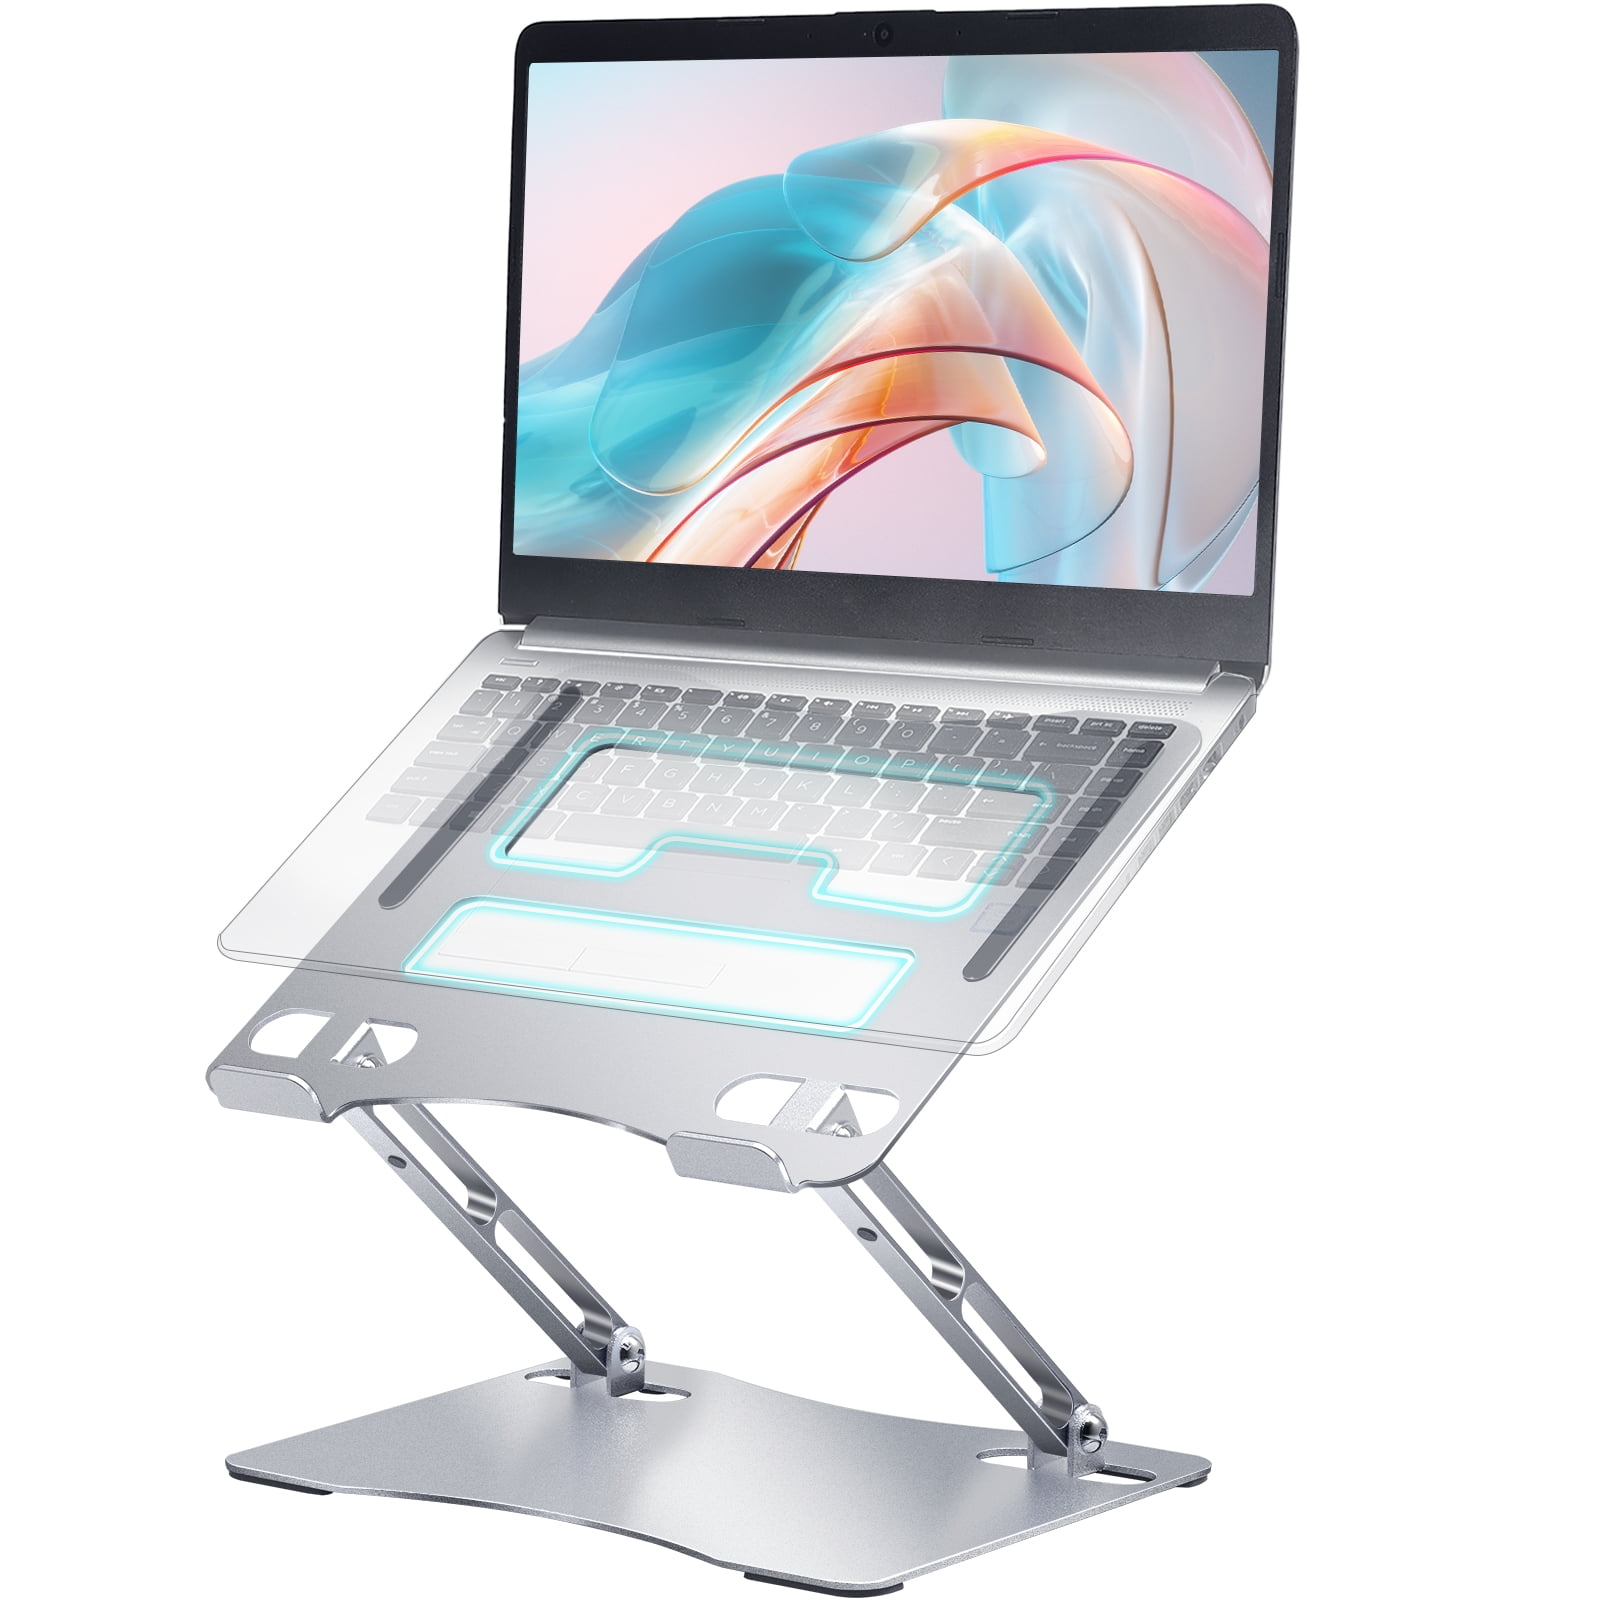 Laptop Stand for Desk, 10-17" Foldable Computer Stand Holder, Ergonomic Aluminum Laptop Holder, Adjustable Laptop Riser with Heat-Vent for Apple Mac / iPad / HP / DELL - Sliver